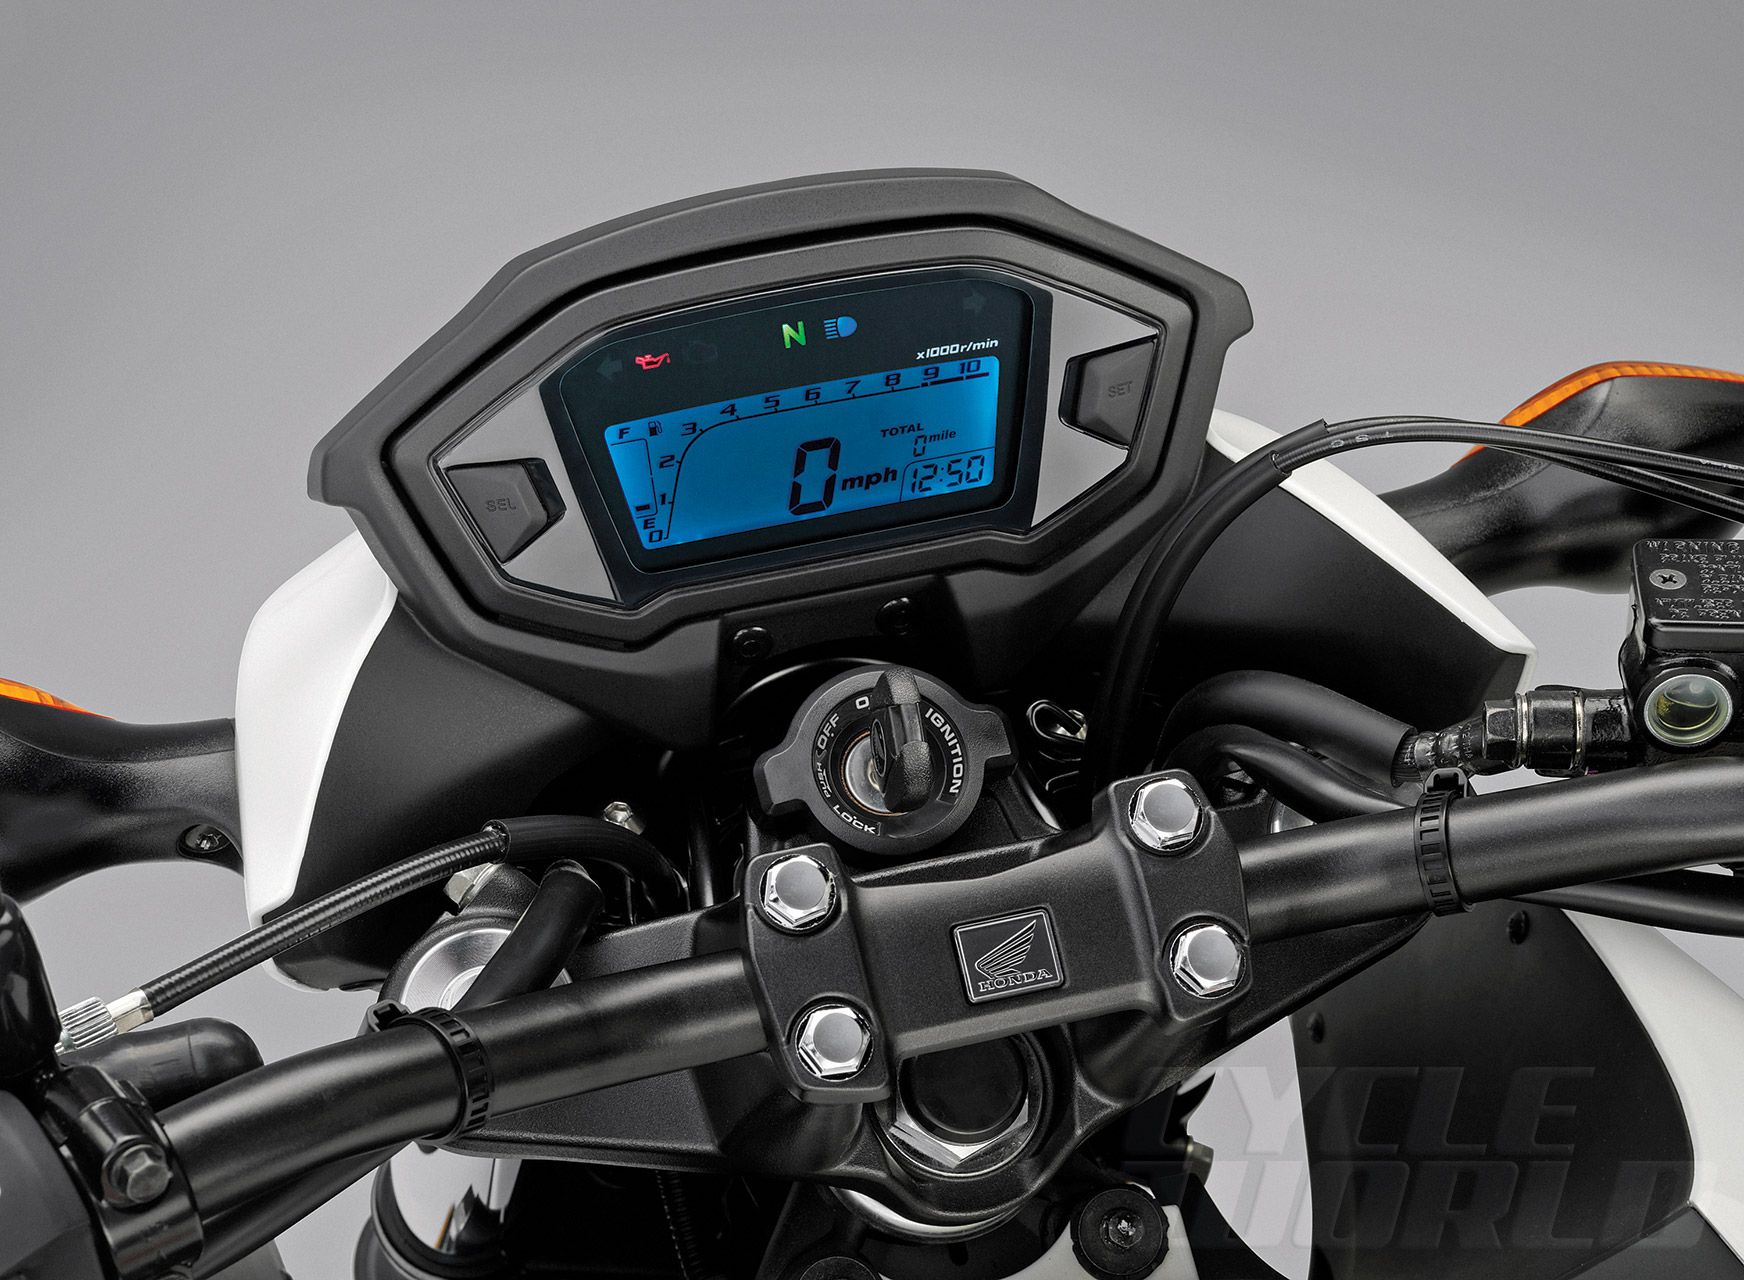 Honda CB500F- CBR500R- First Ride Review- Photo Gallery